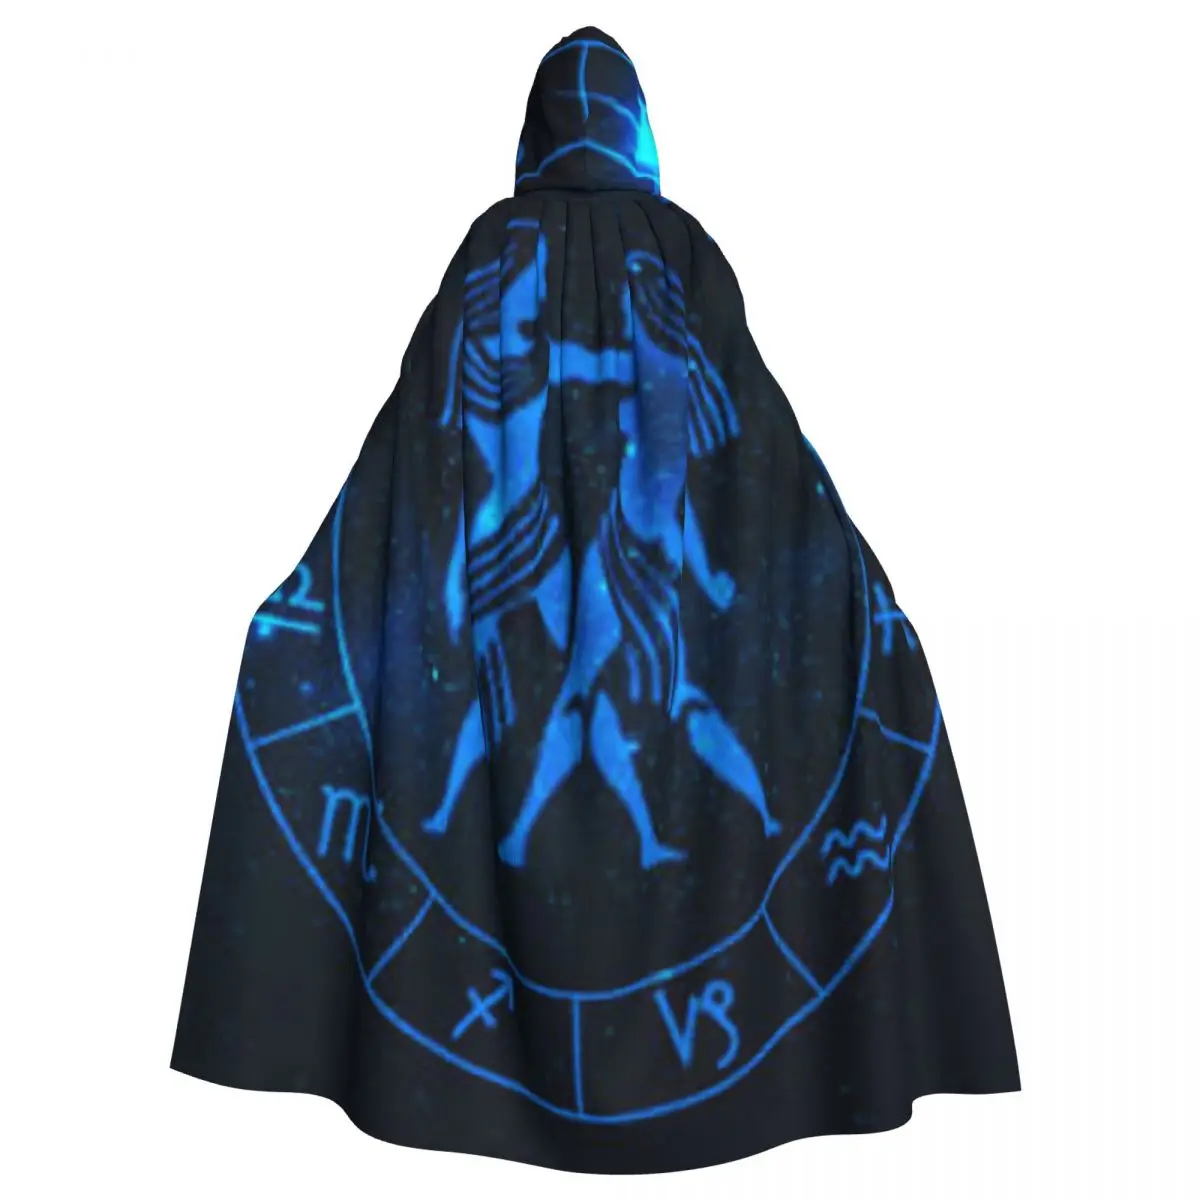 

Gemini Horoscope Zodiac Galaxy Stars Hooded Cloak Coat Halloween Cosplay Costume Vampire Devil Wizard Cape Gown Party